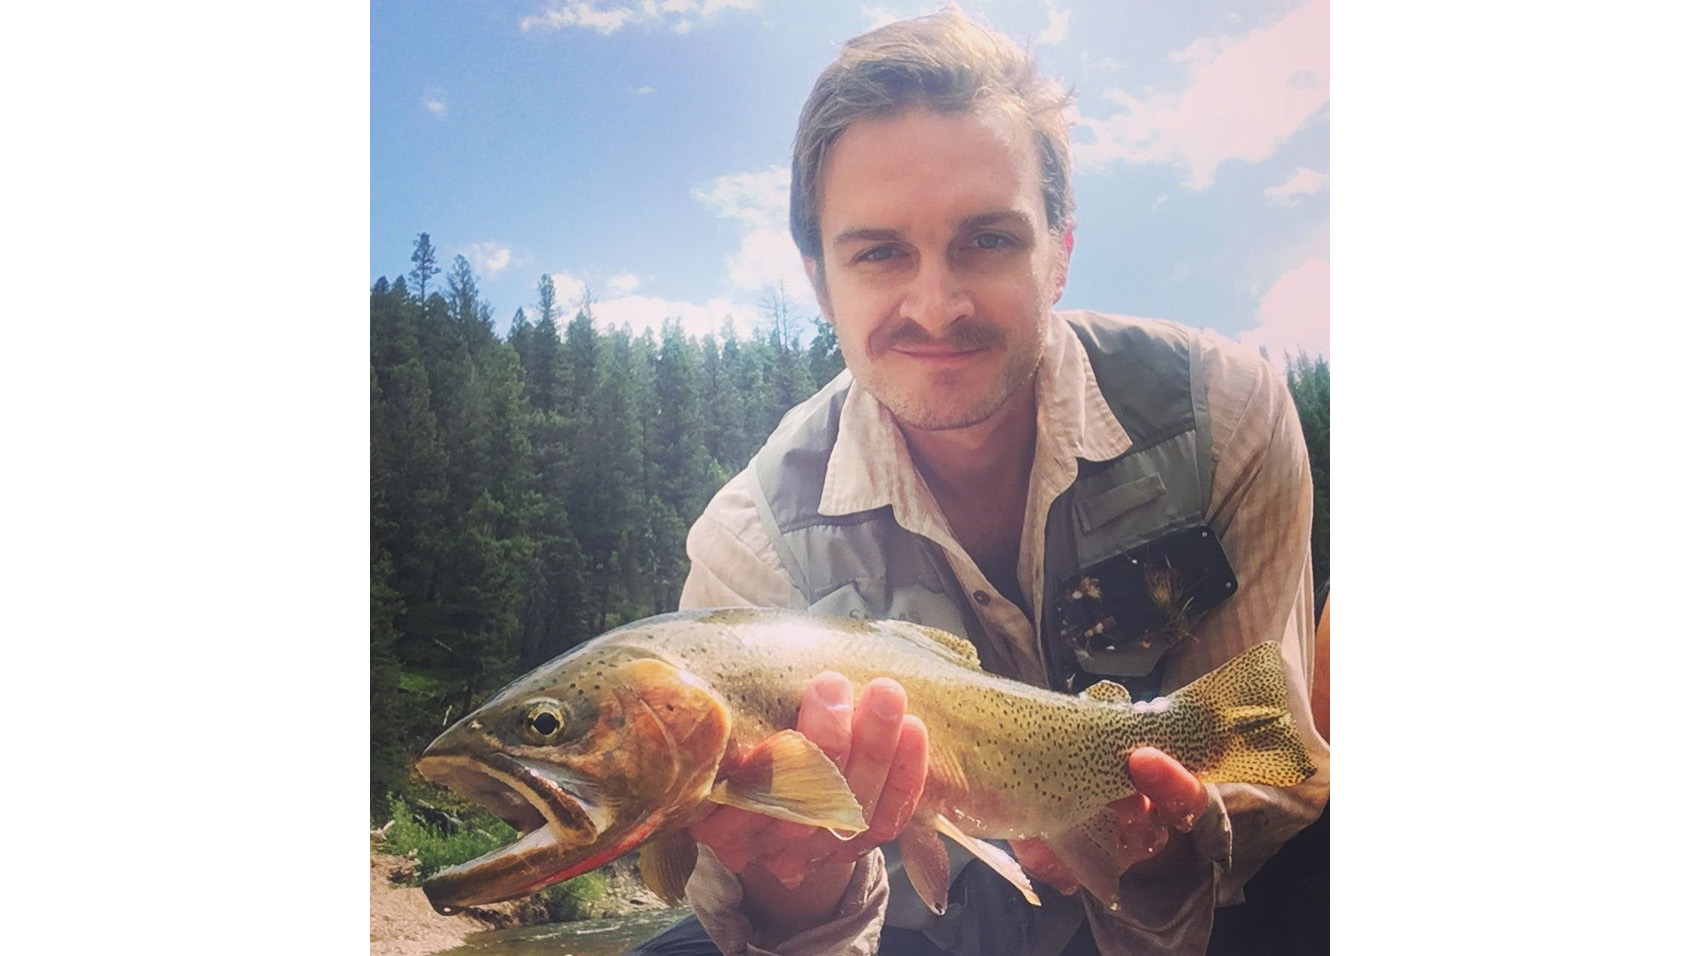 Joseph Denhert holding a trout fish.